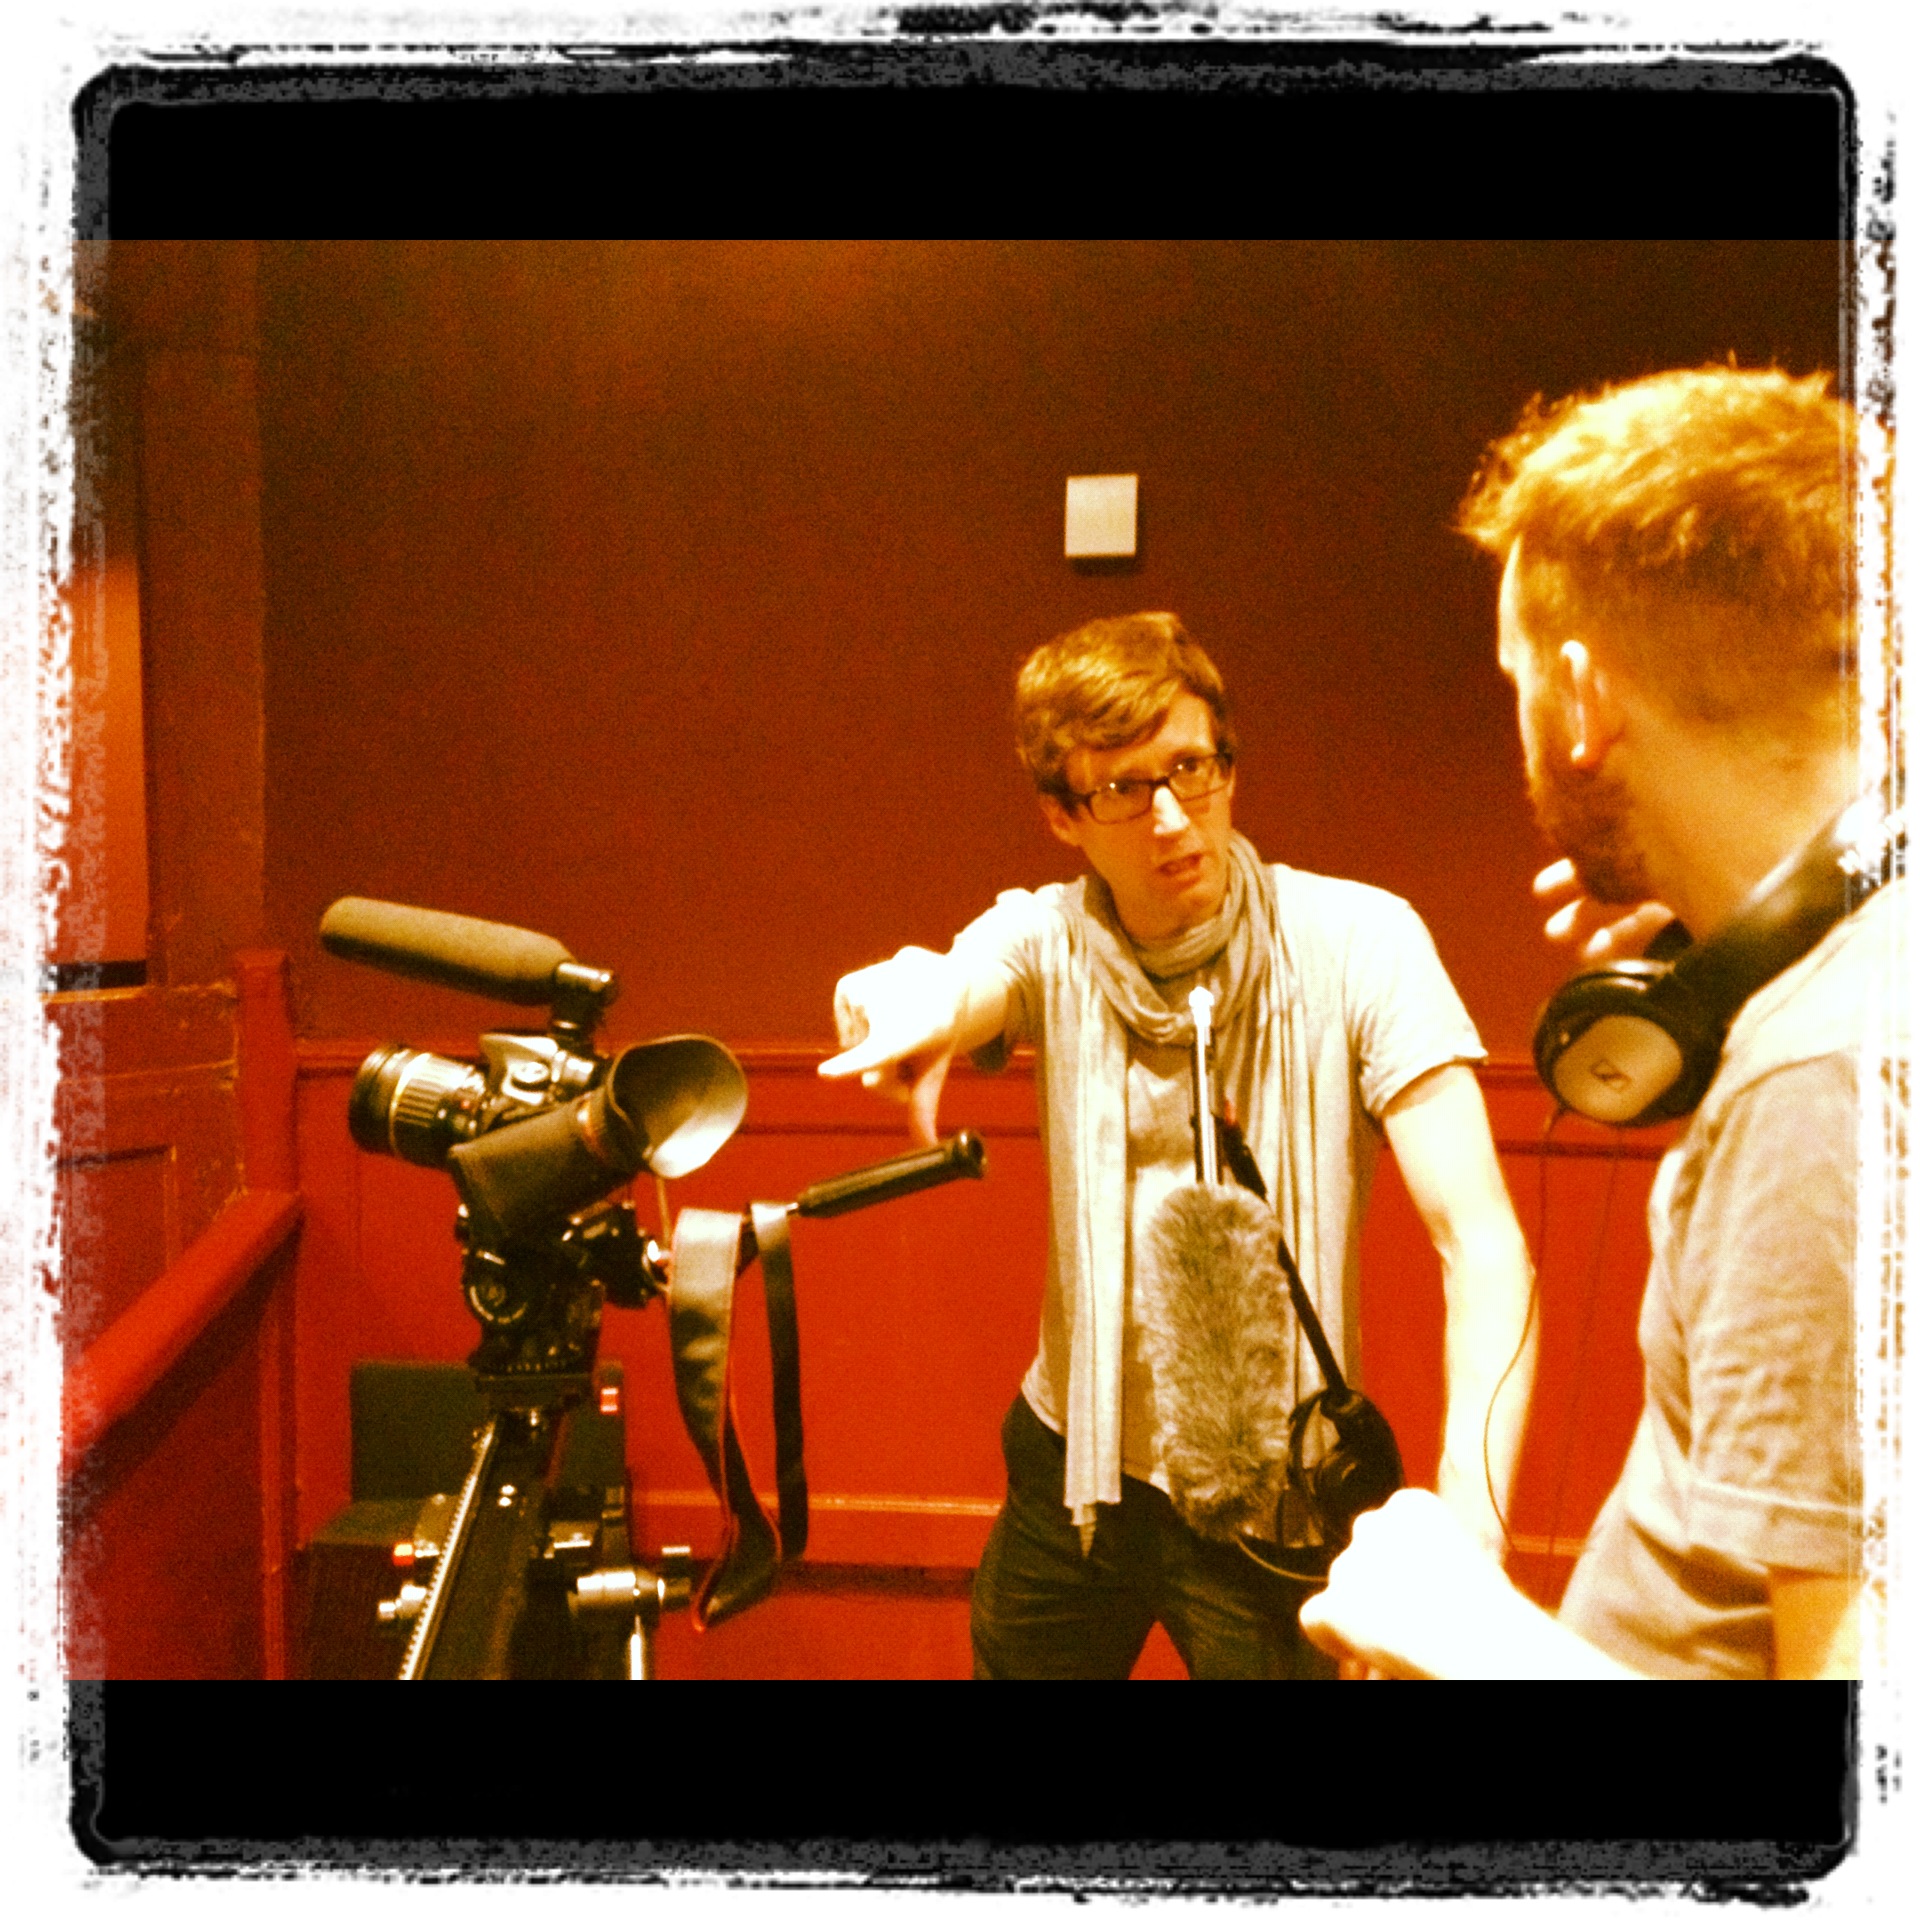 Paul Clarke directing Geoff Taylor the film maker